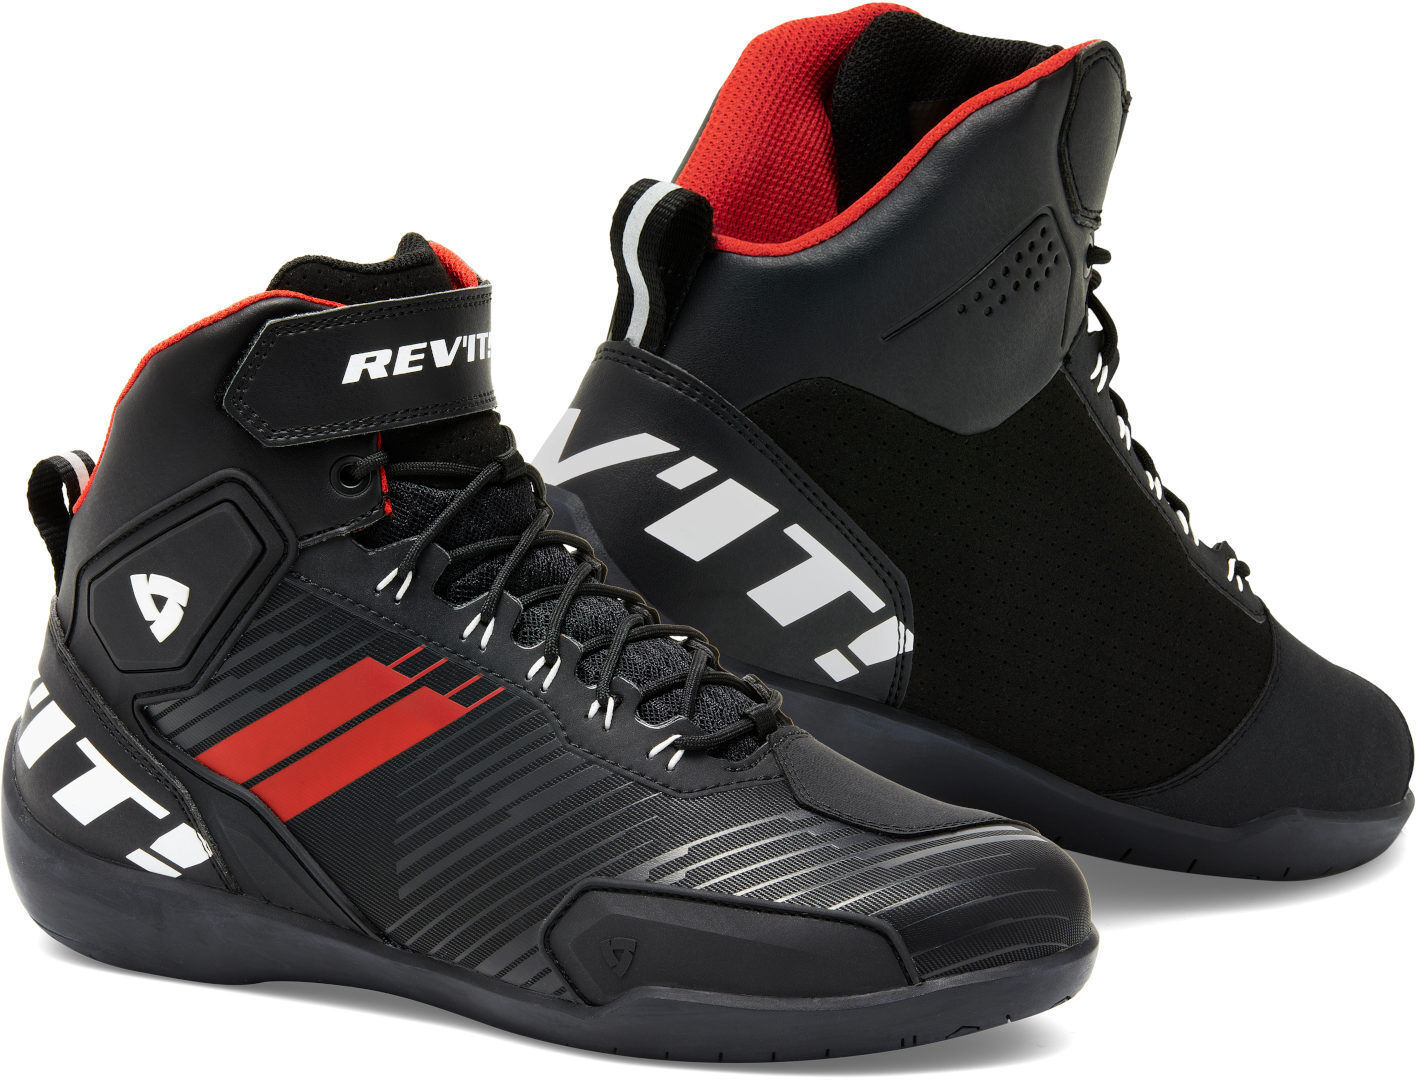 Revit G-Force Zapatos de motocicleta - Negro Blanco Rojo (42)